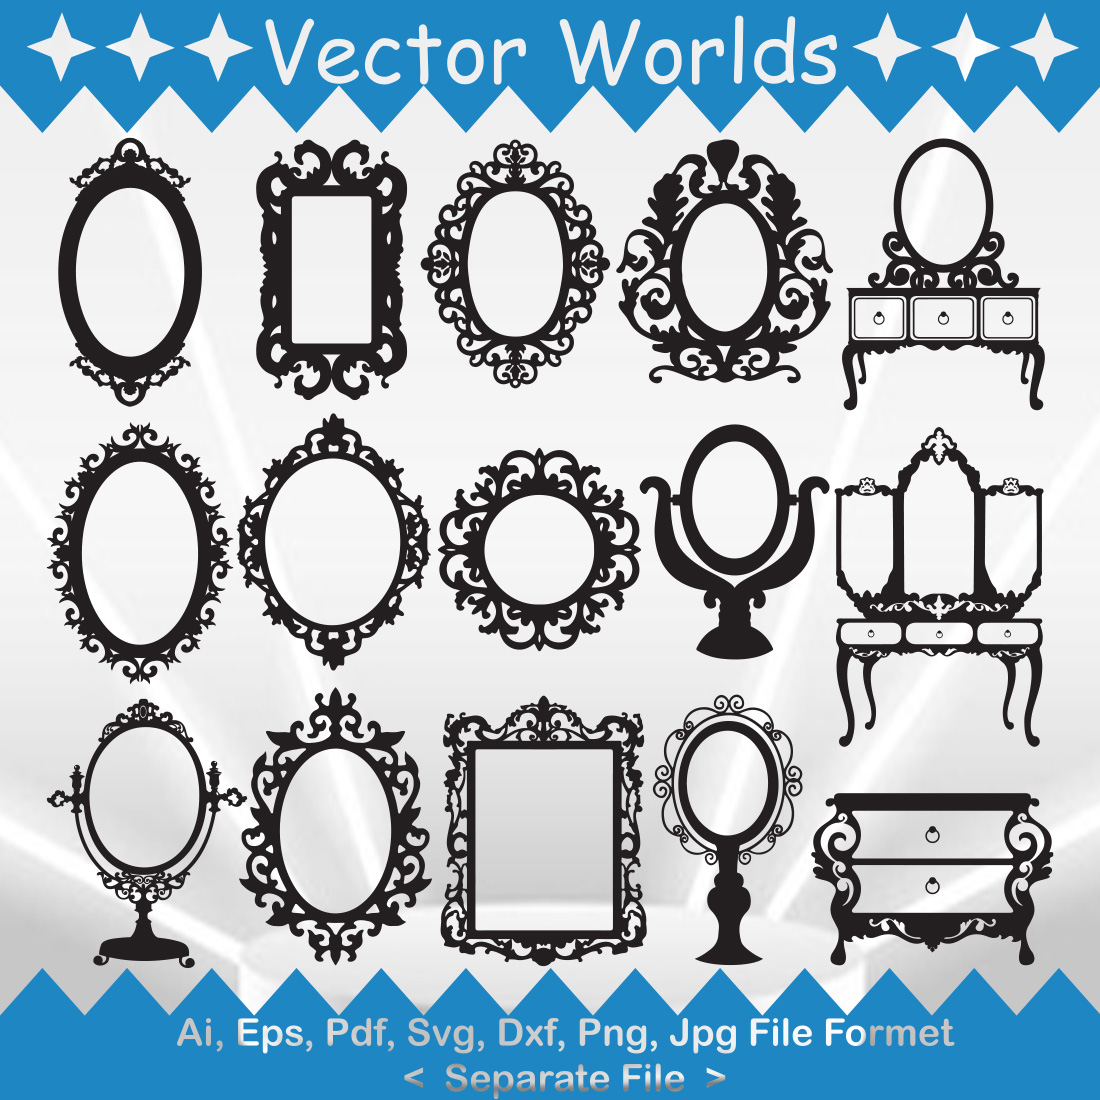 Mirror SVG Vector Design cover image.